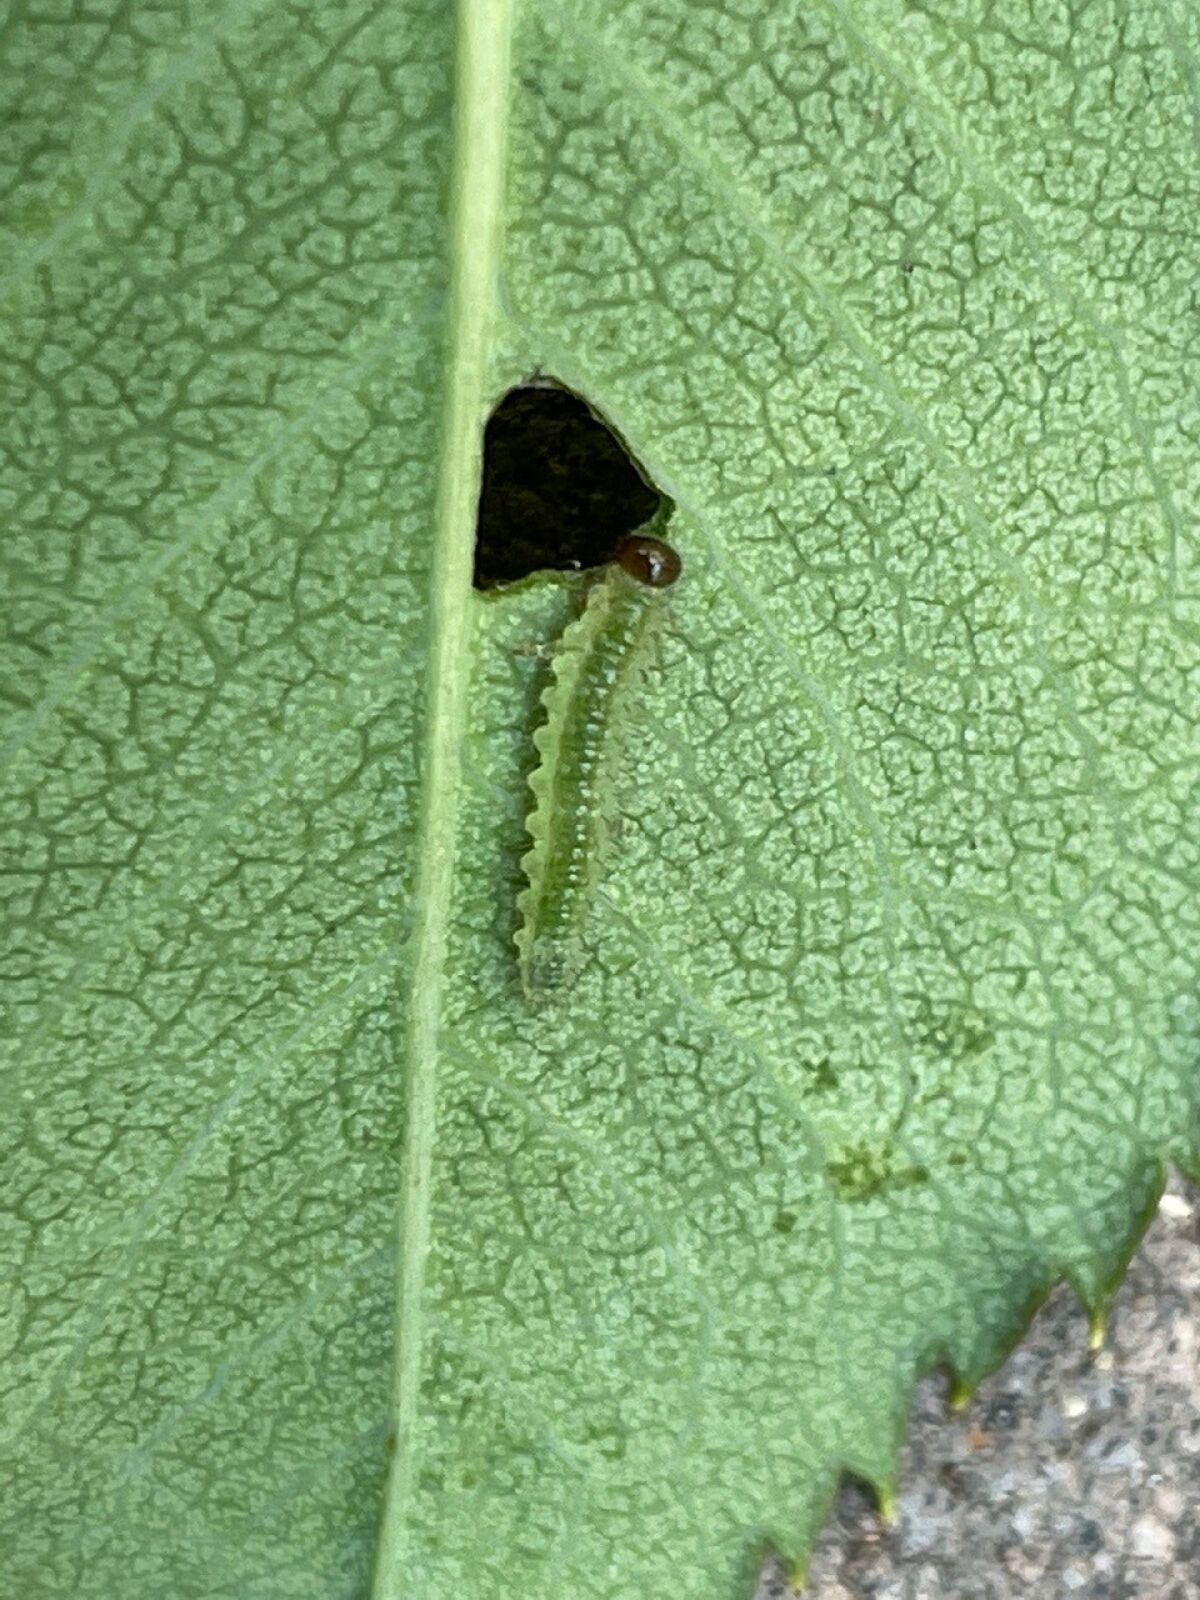 A rose slug on the underside of the leaf.